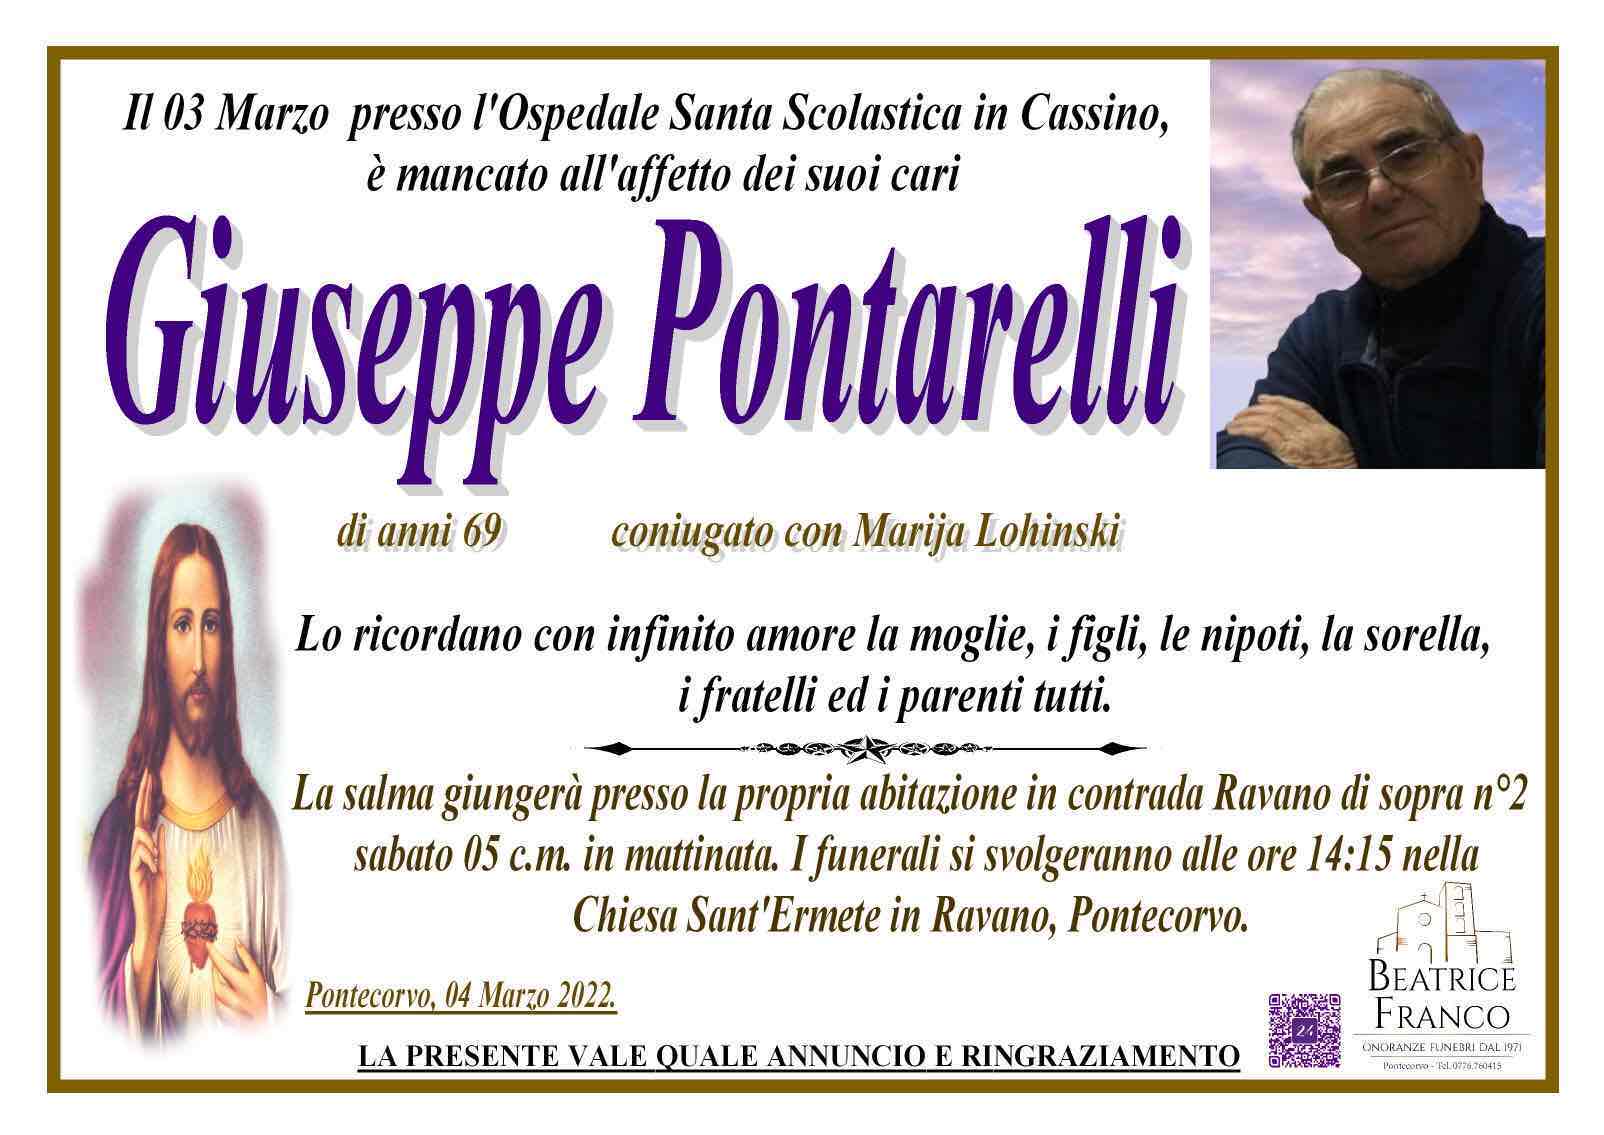 Giuseppe Pontarelli